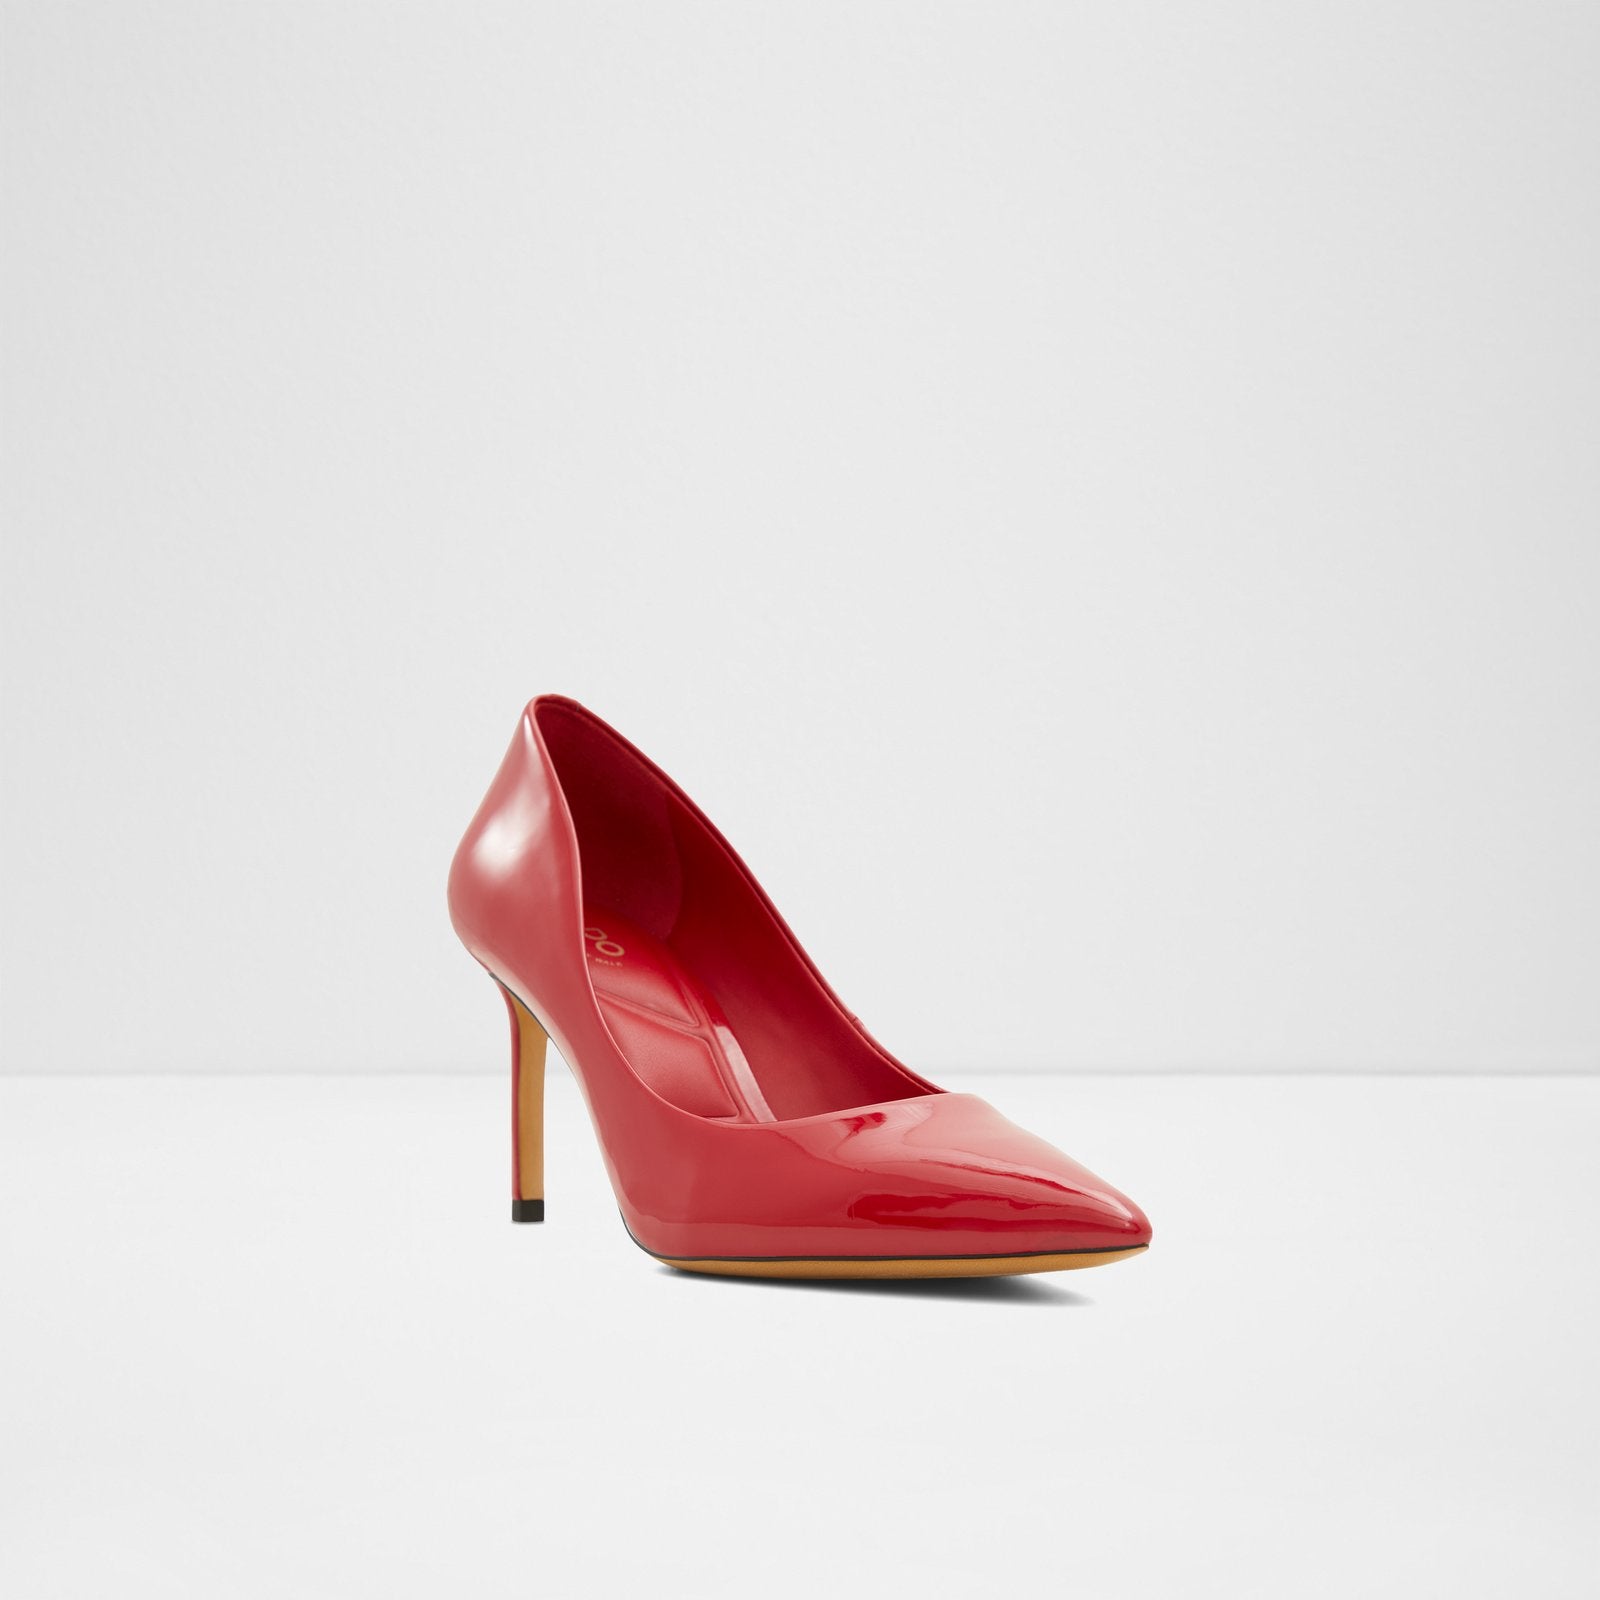 Stessymid / Heeled Women Shoes - Red - ALDO KSA